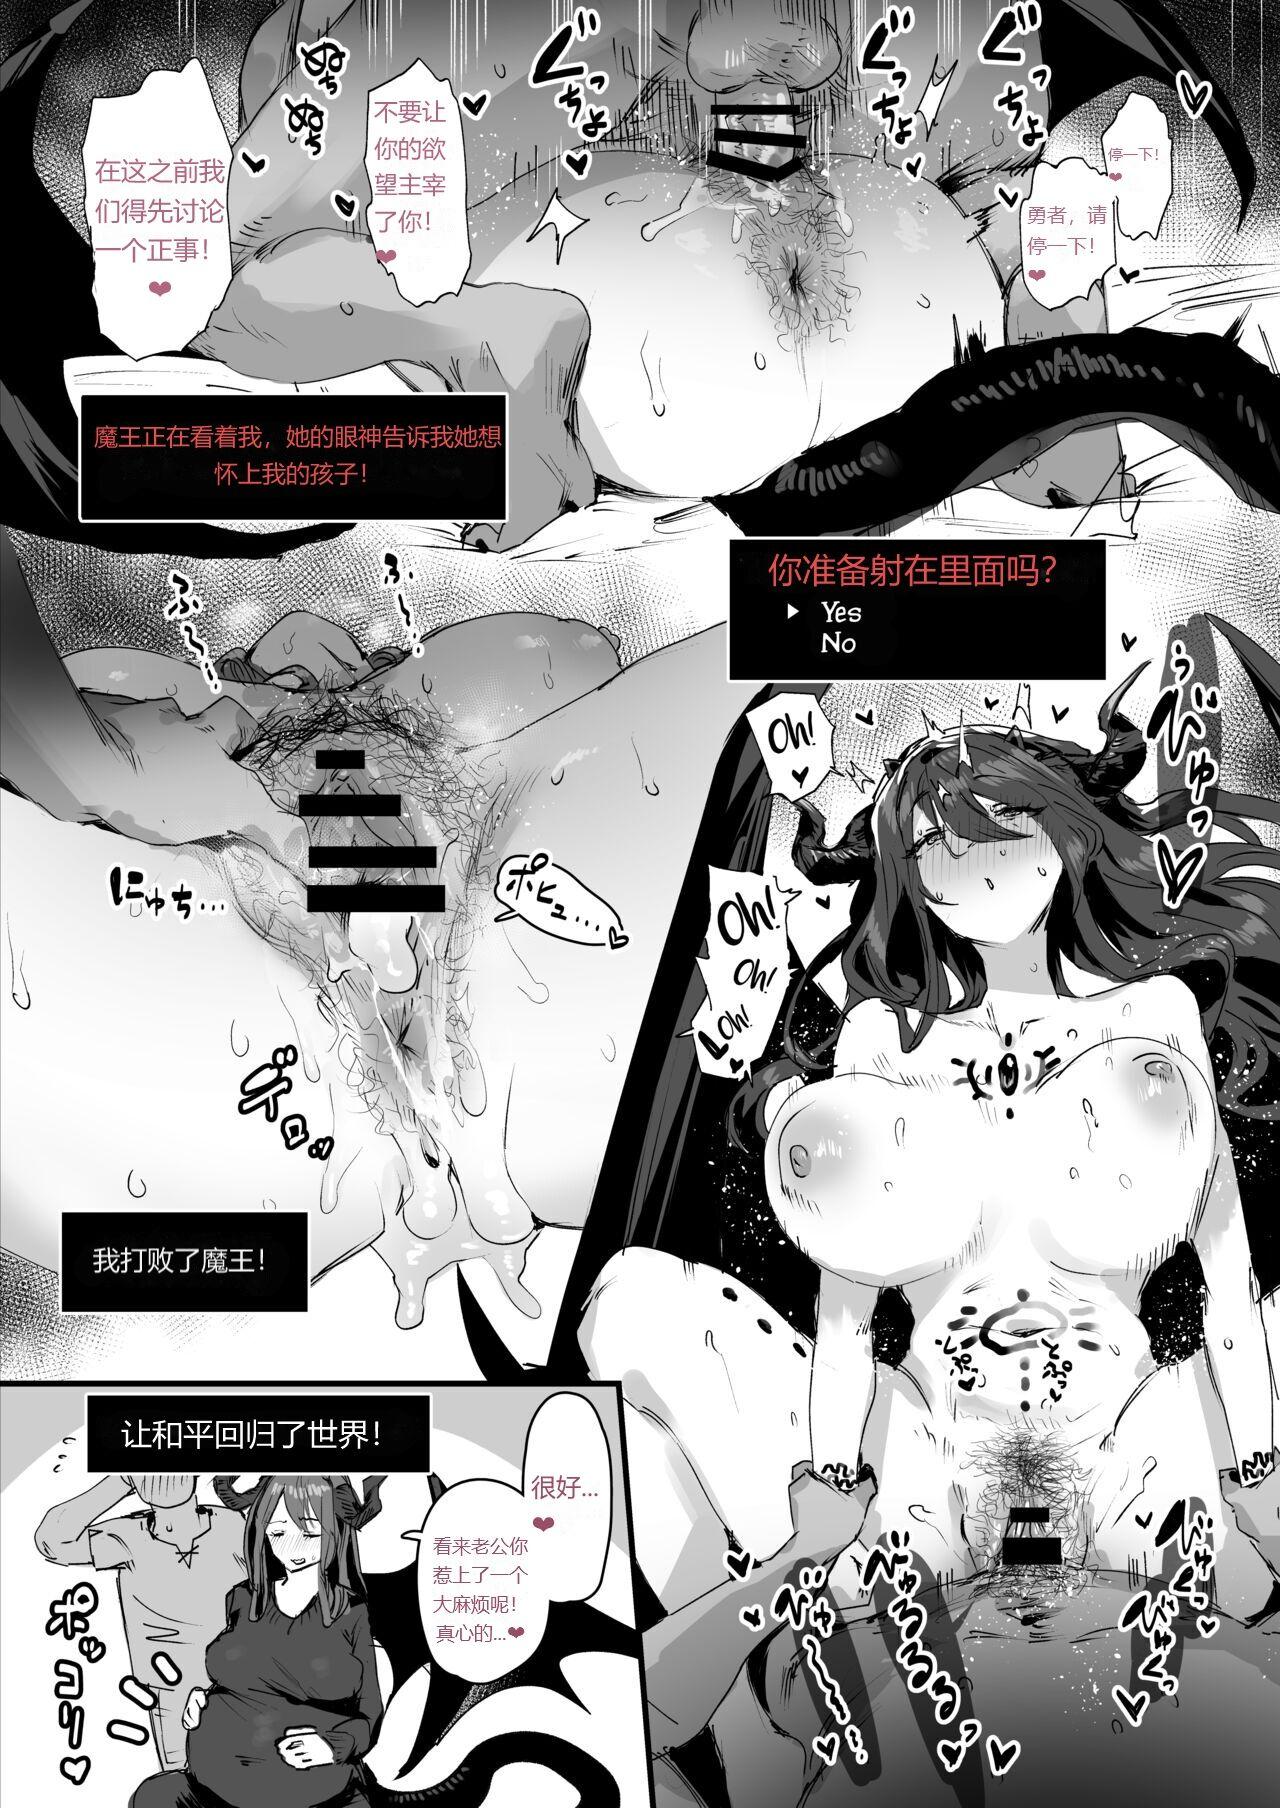 Ano Maou-sama Omake no Nakadashi Manga(钻排玩具车联合汉化） - Original Penetration - Page 3